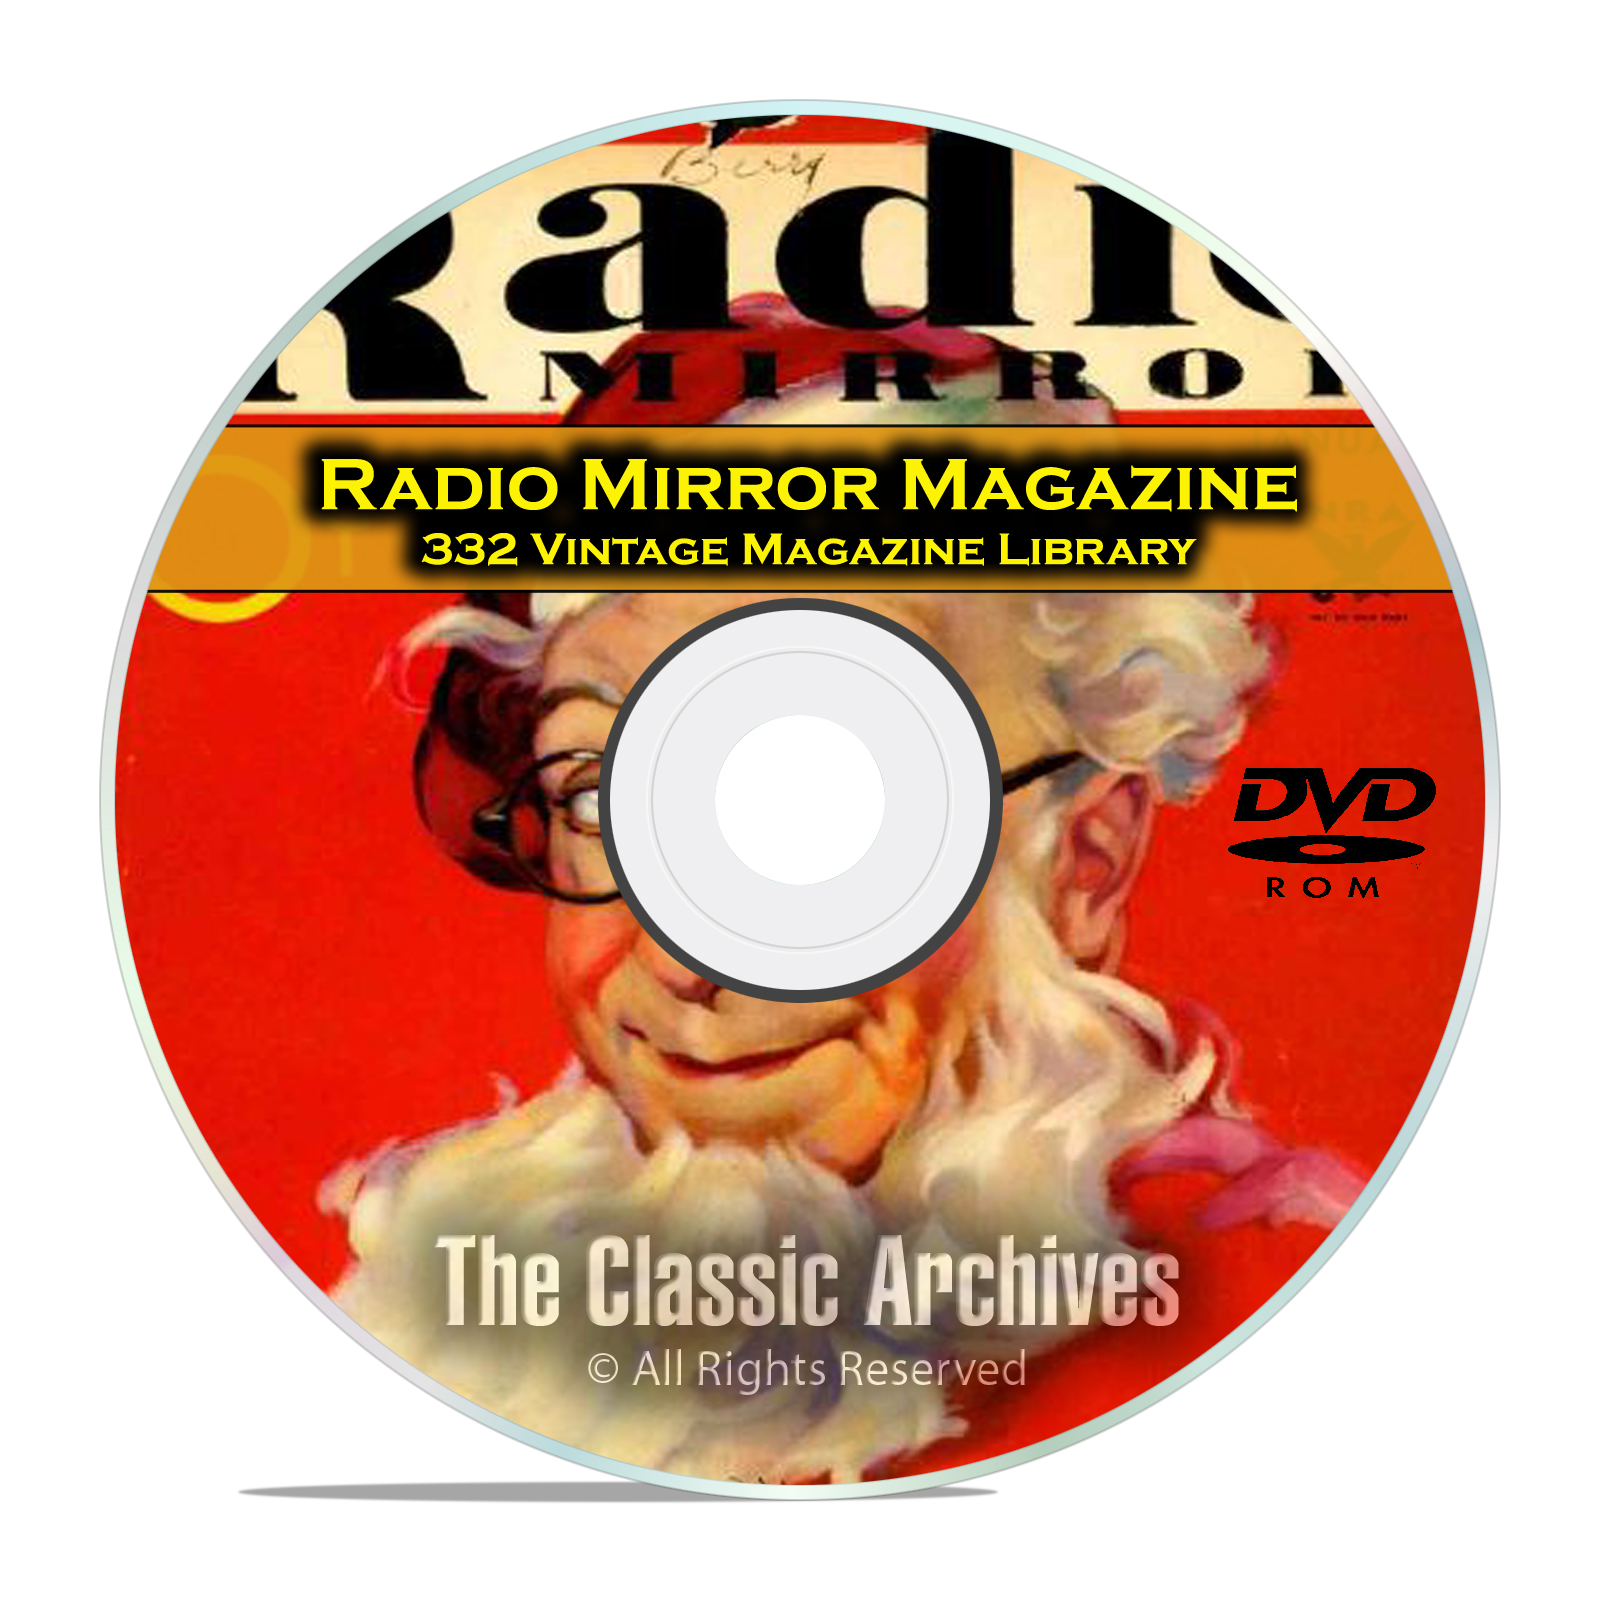 Radio Mirror, 332 Vintage Old Time Radio Magazine Collection in PDF on DVD